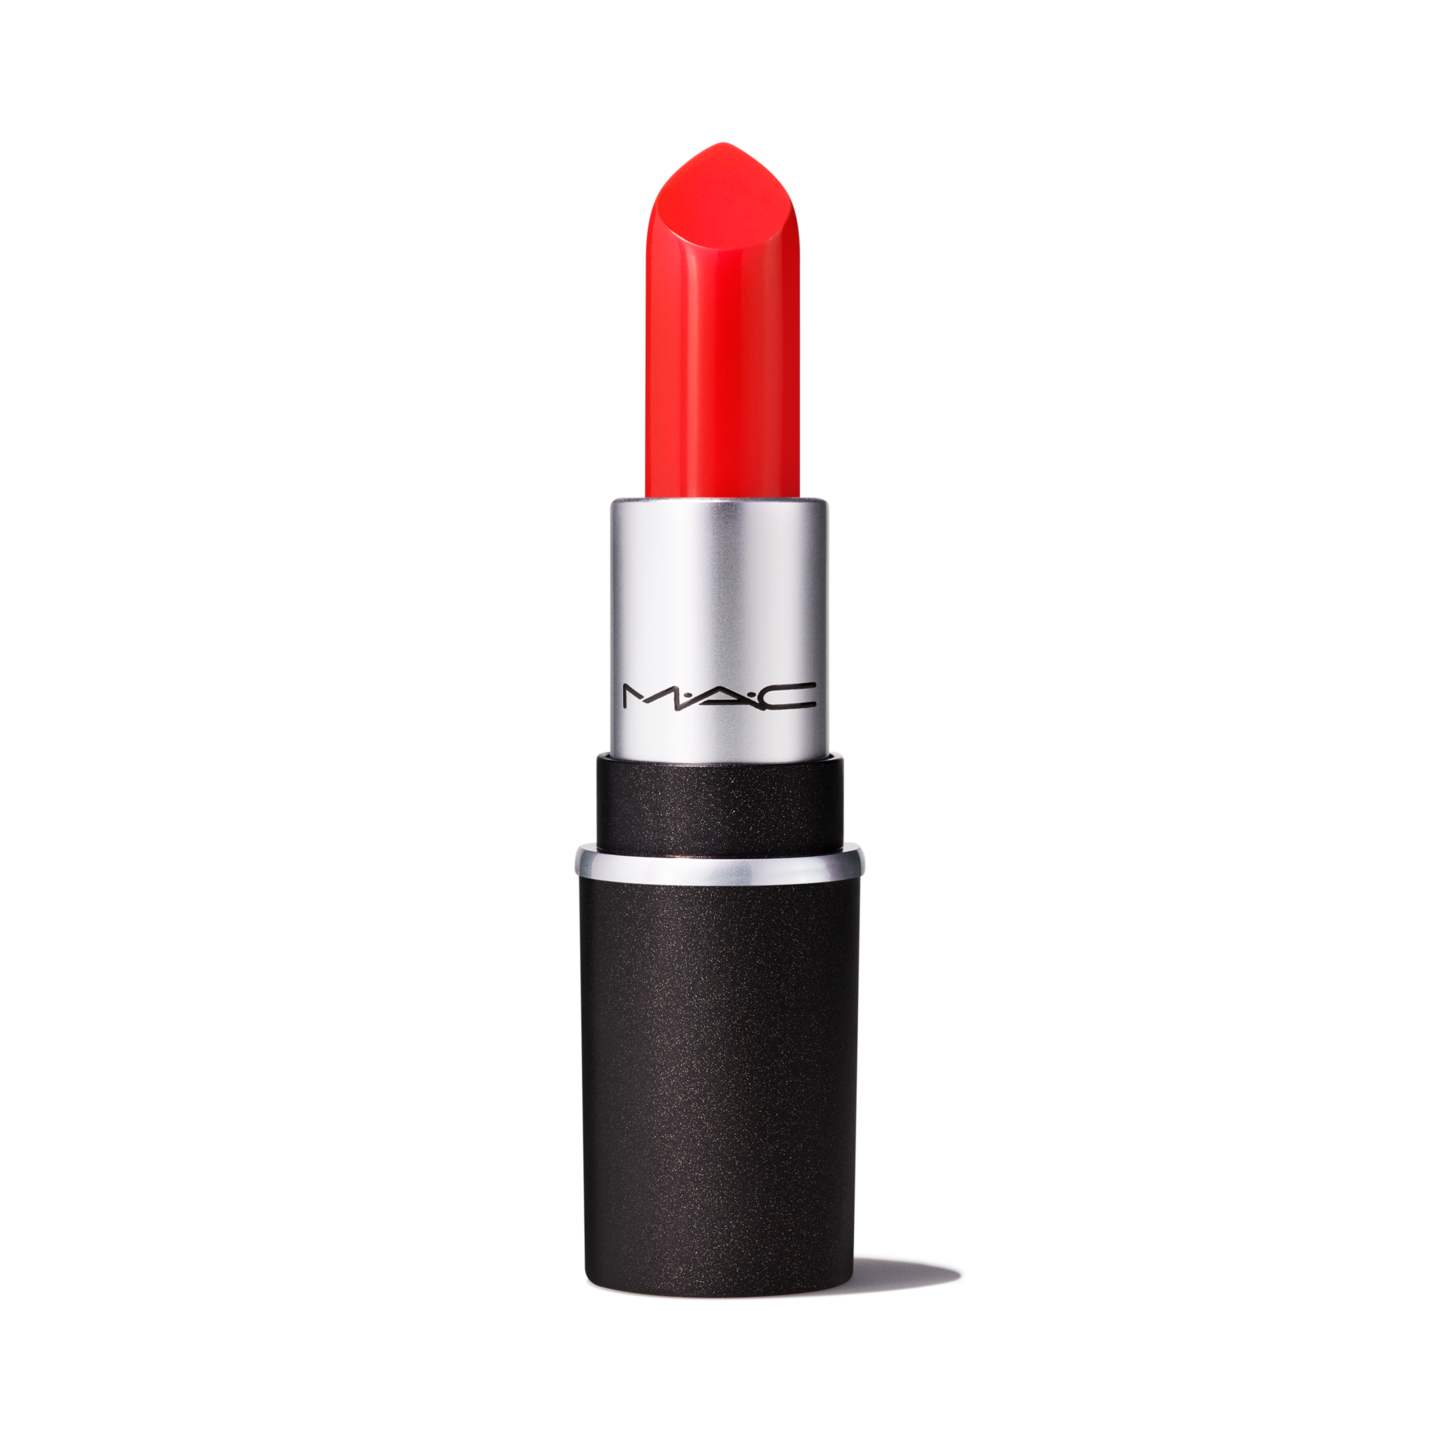 Mac Velvet Teddy Lipstick  Mac lipstick shades, Lipstick kit, Lipstick  makeup